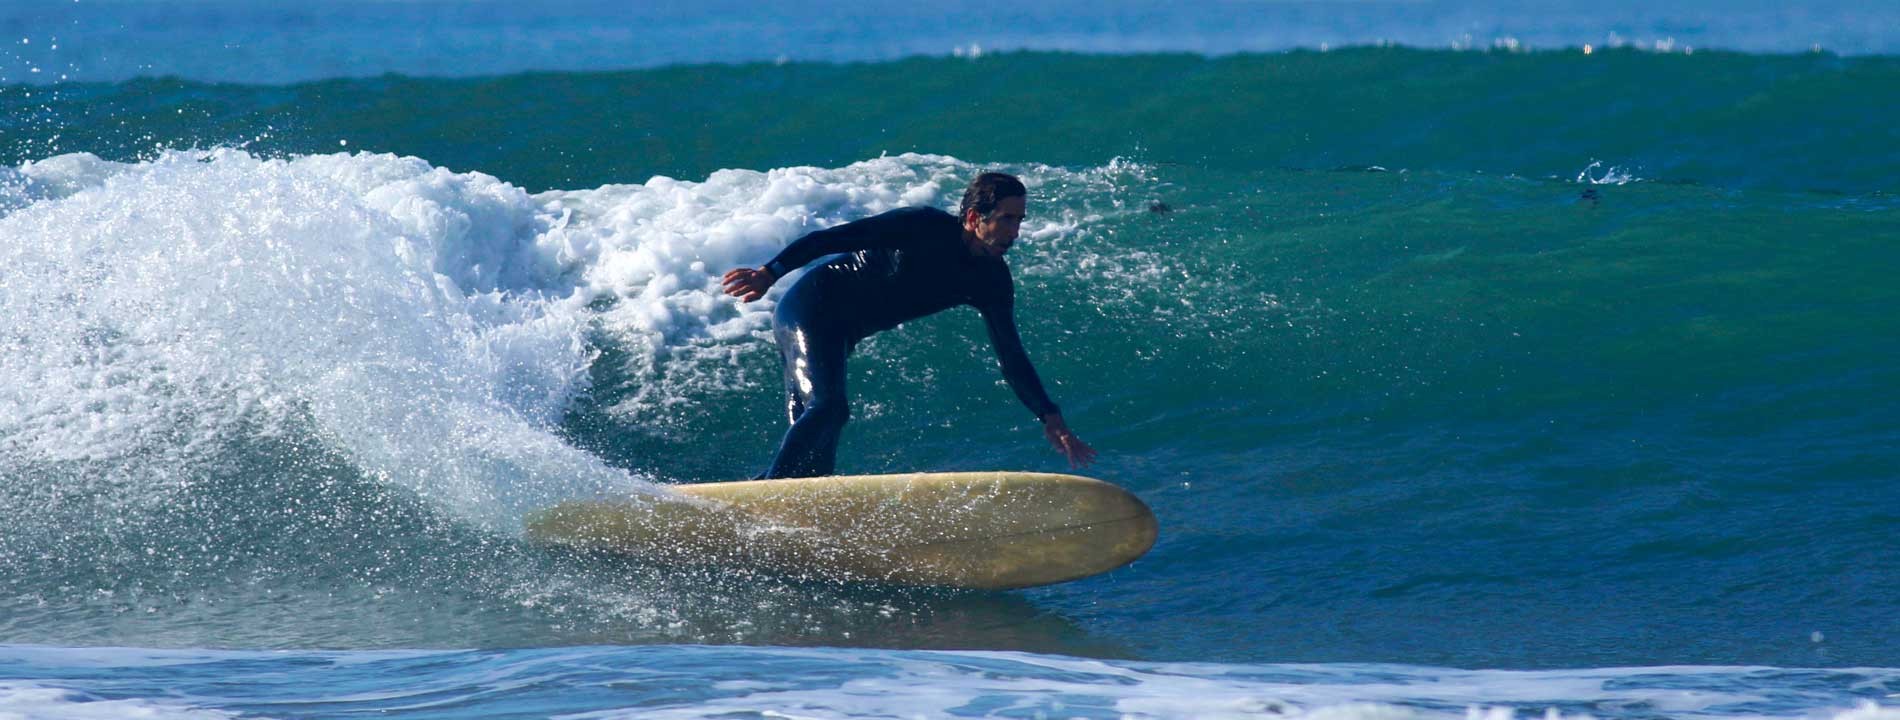 Surf Photos by Jeff Kerridge